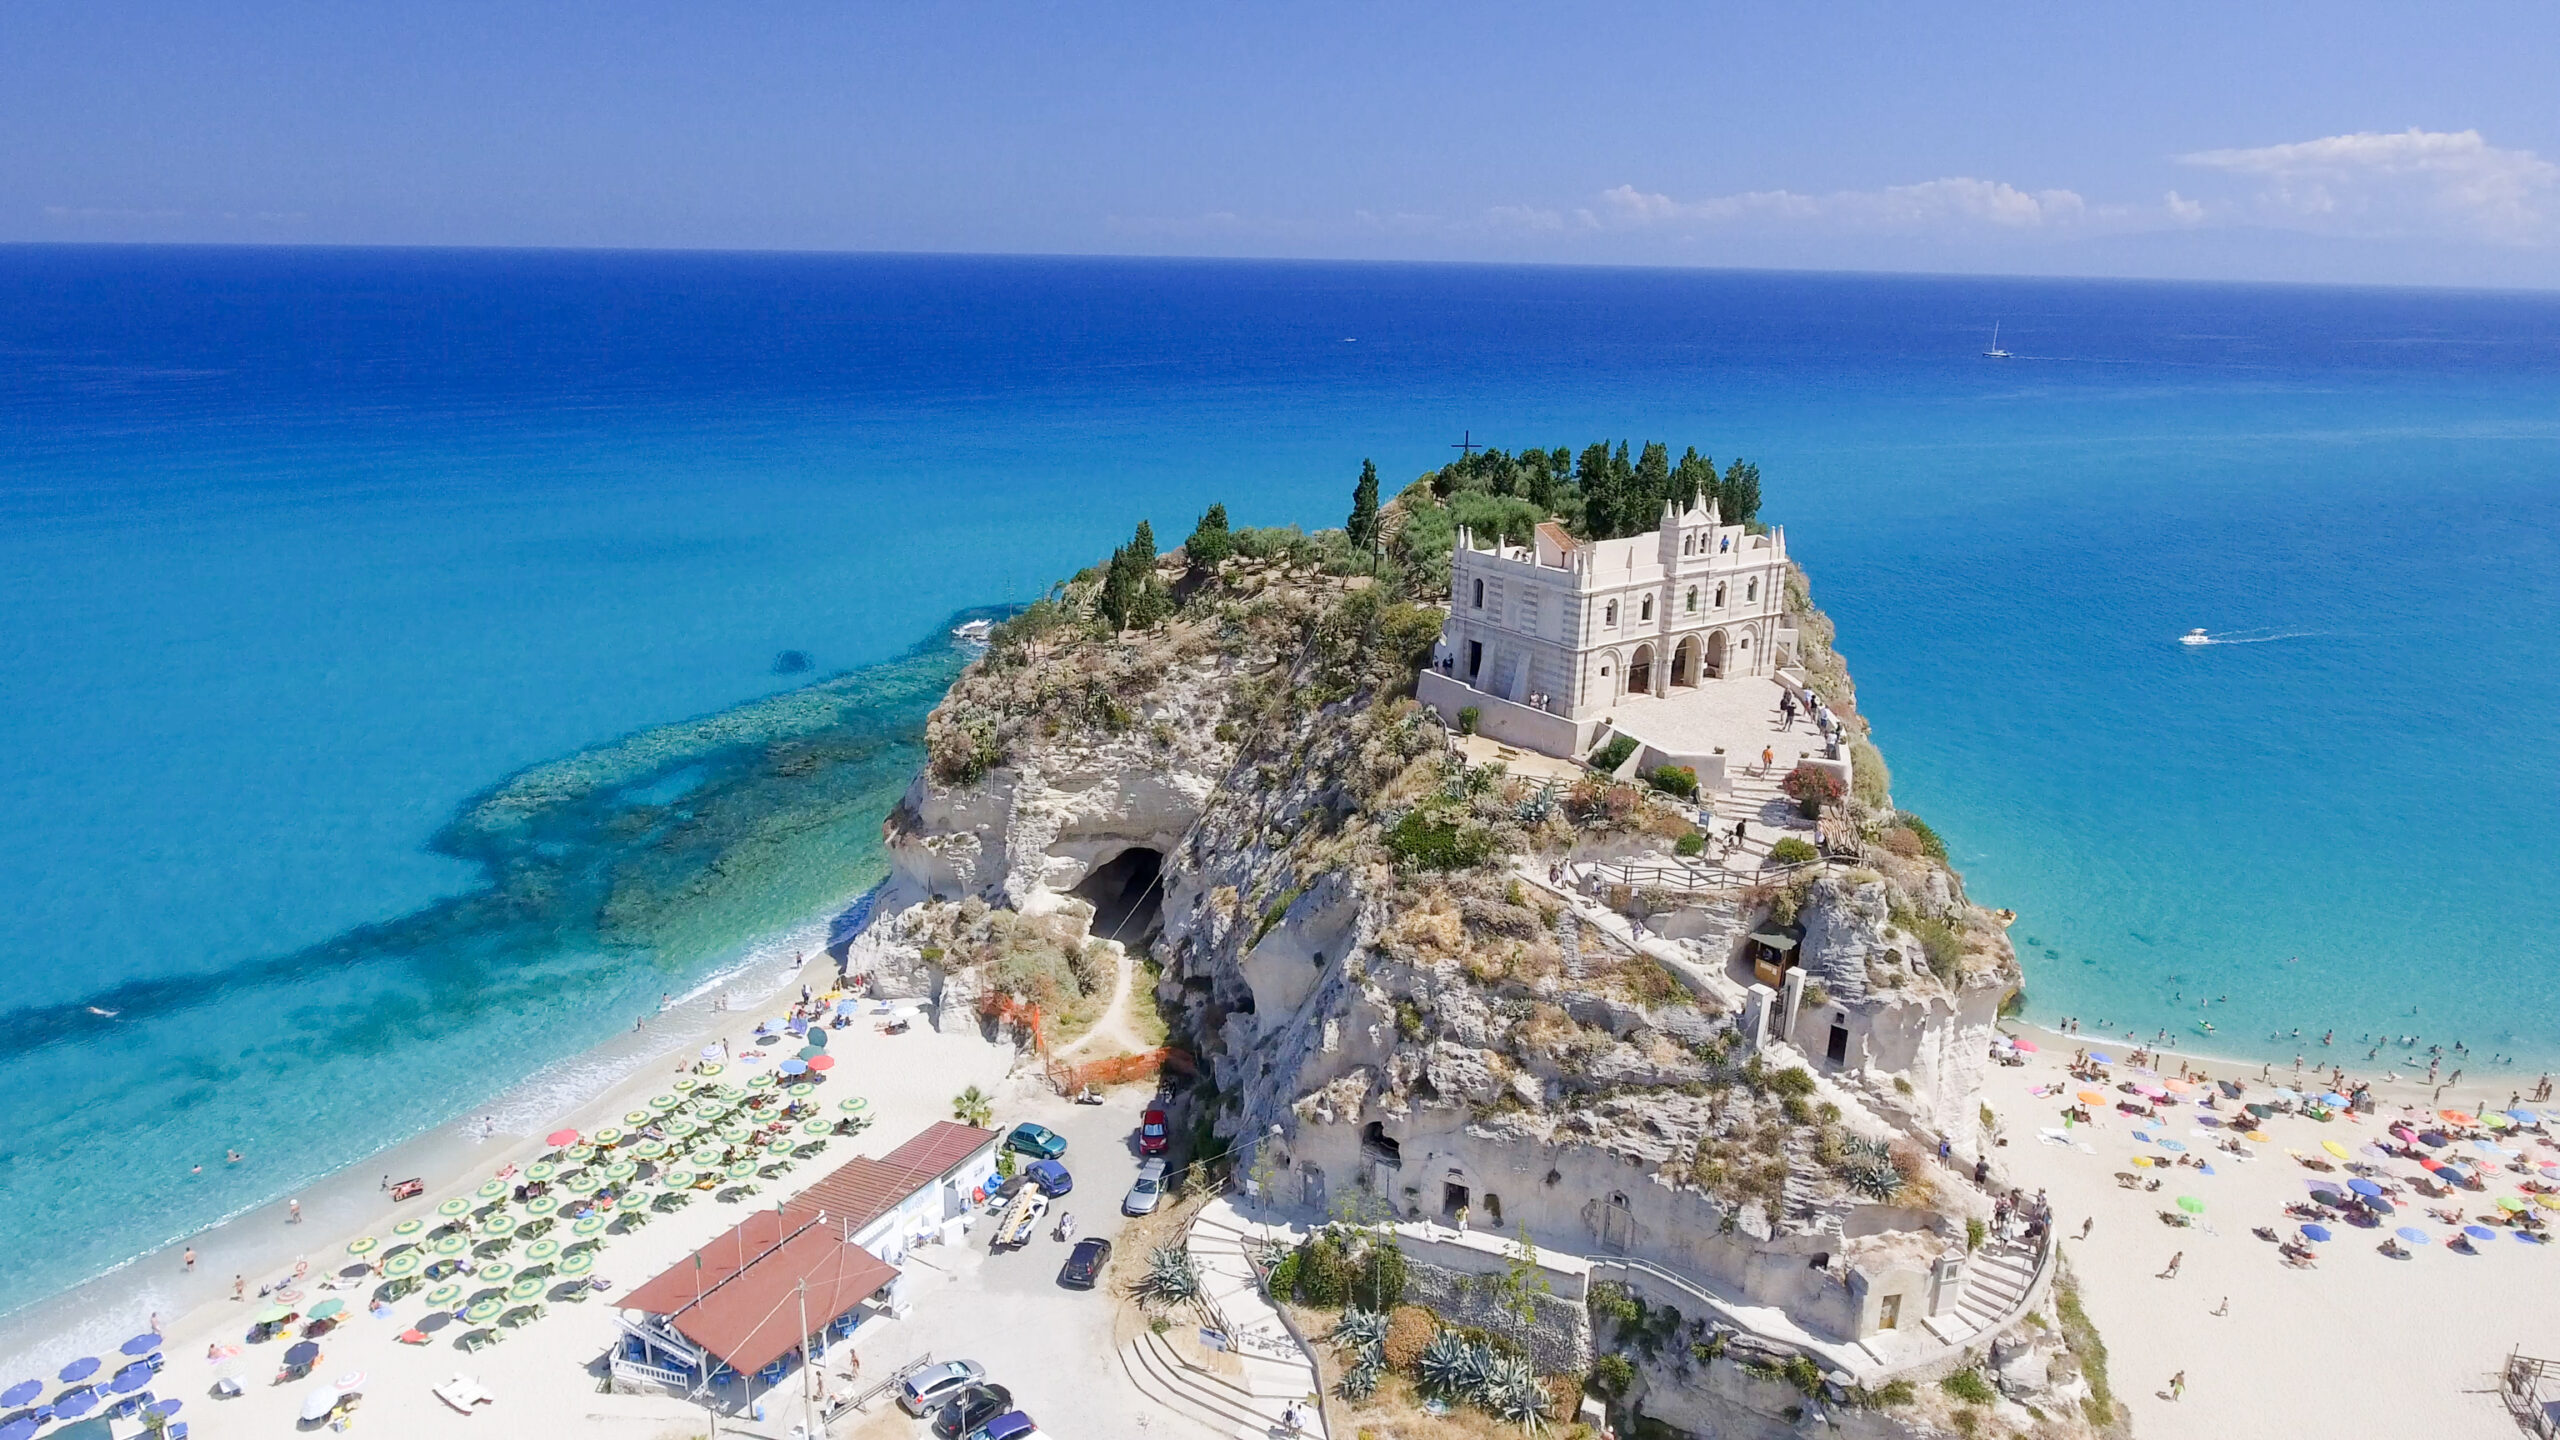 Luftaufnahme des Klosters Santa Maria dell'Isola in Tropea. Reise nach Kalabrien in Italien